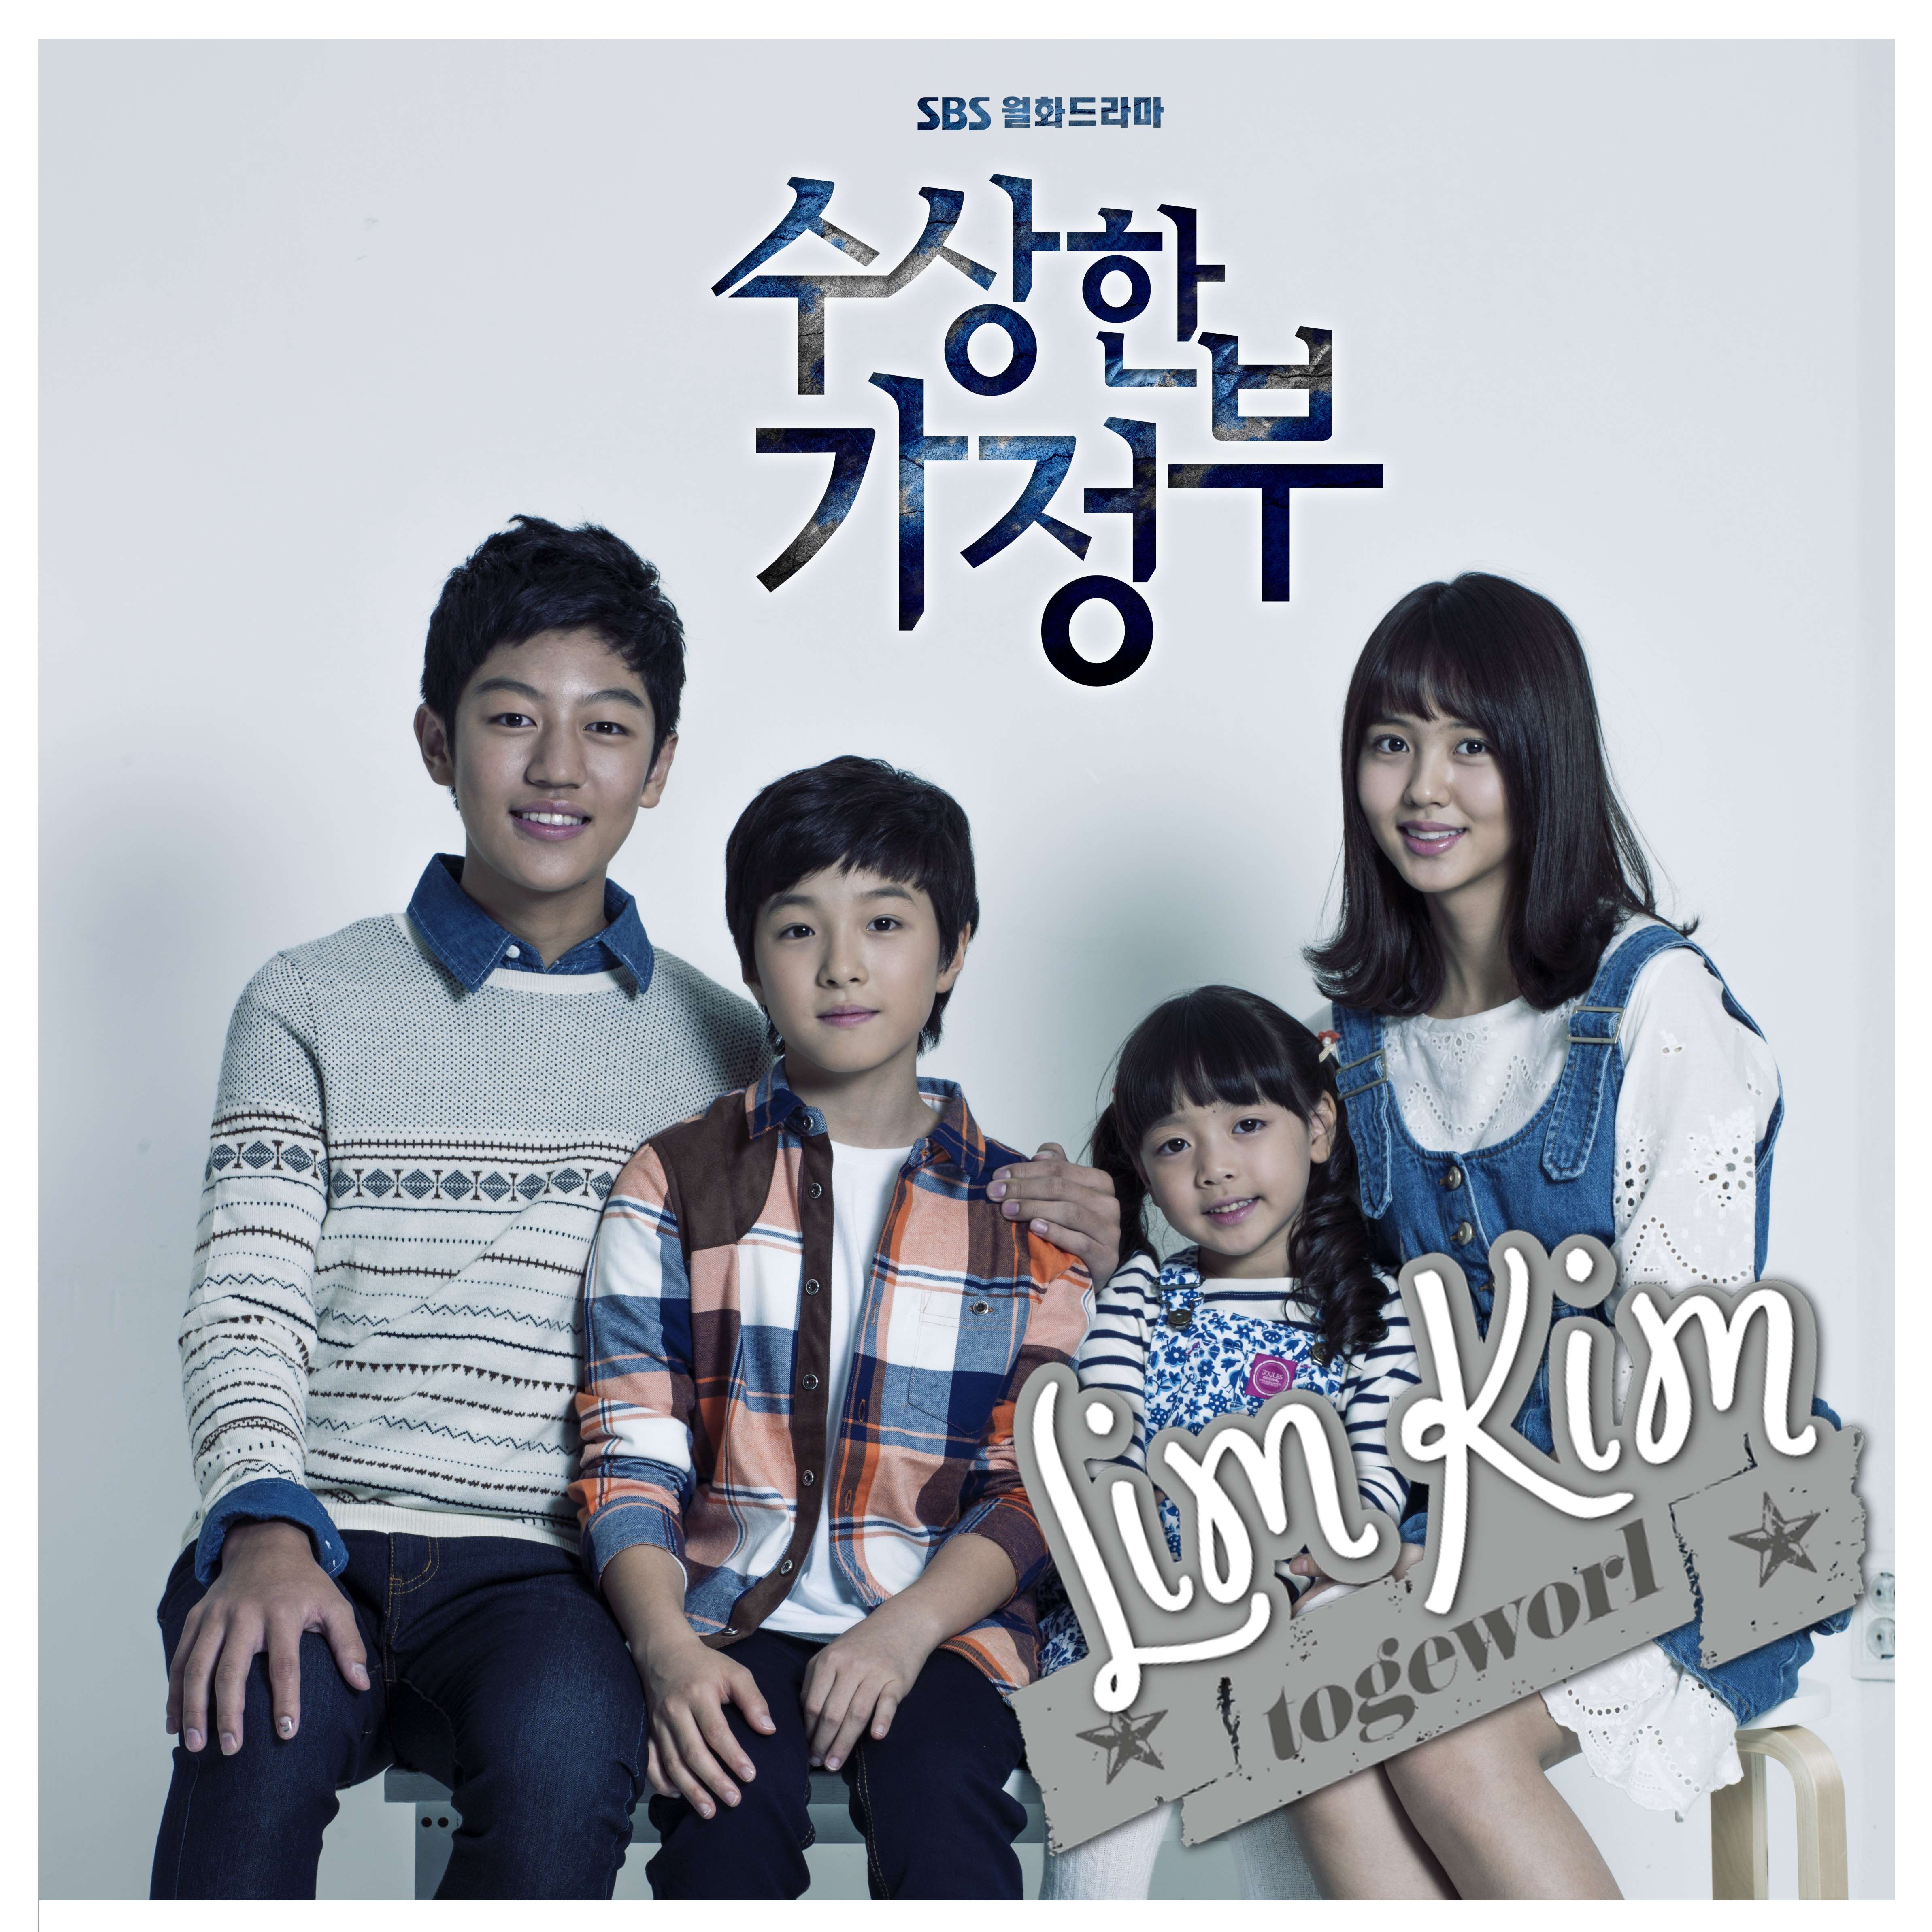 [Single] Lim Kim (Togeworl) - Suspicious Housekeeper OST Part.2